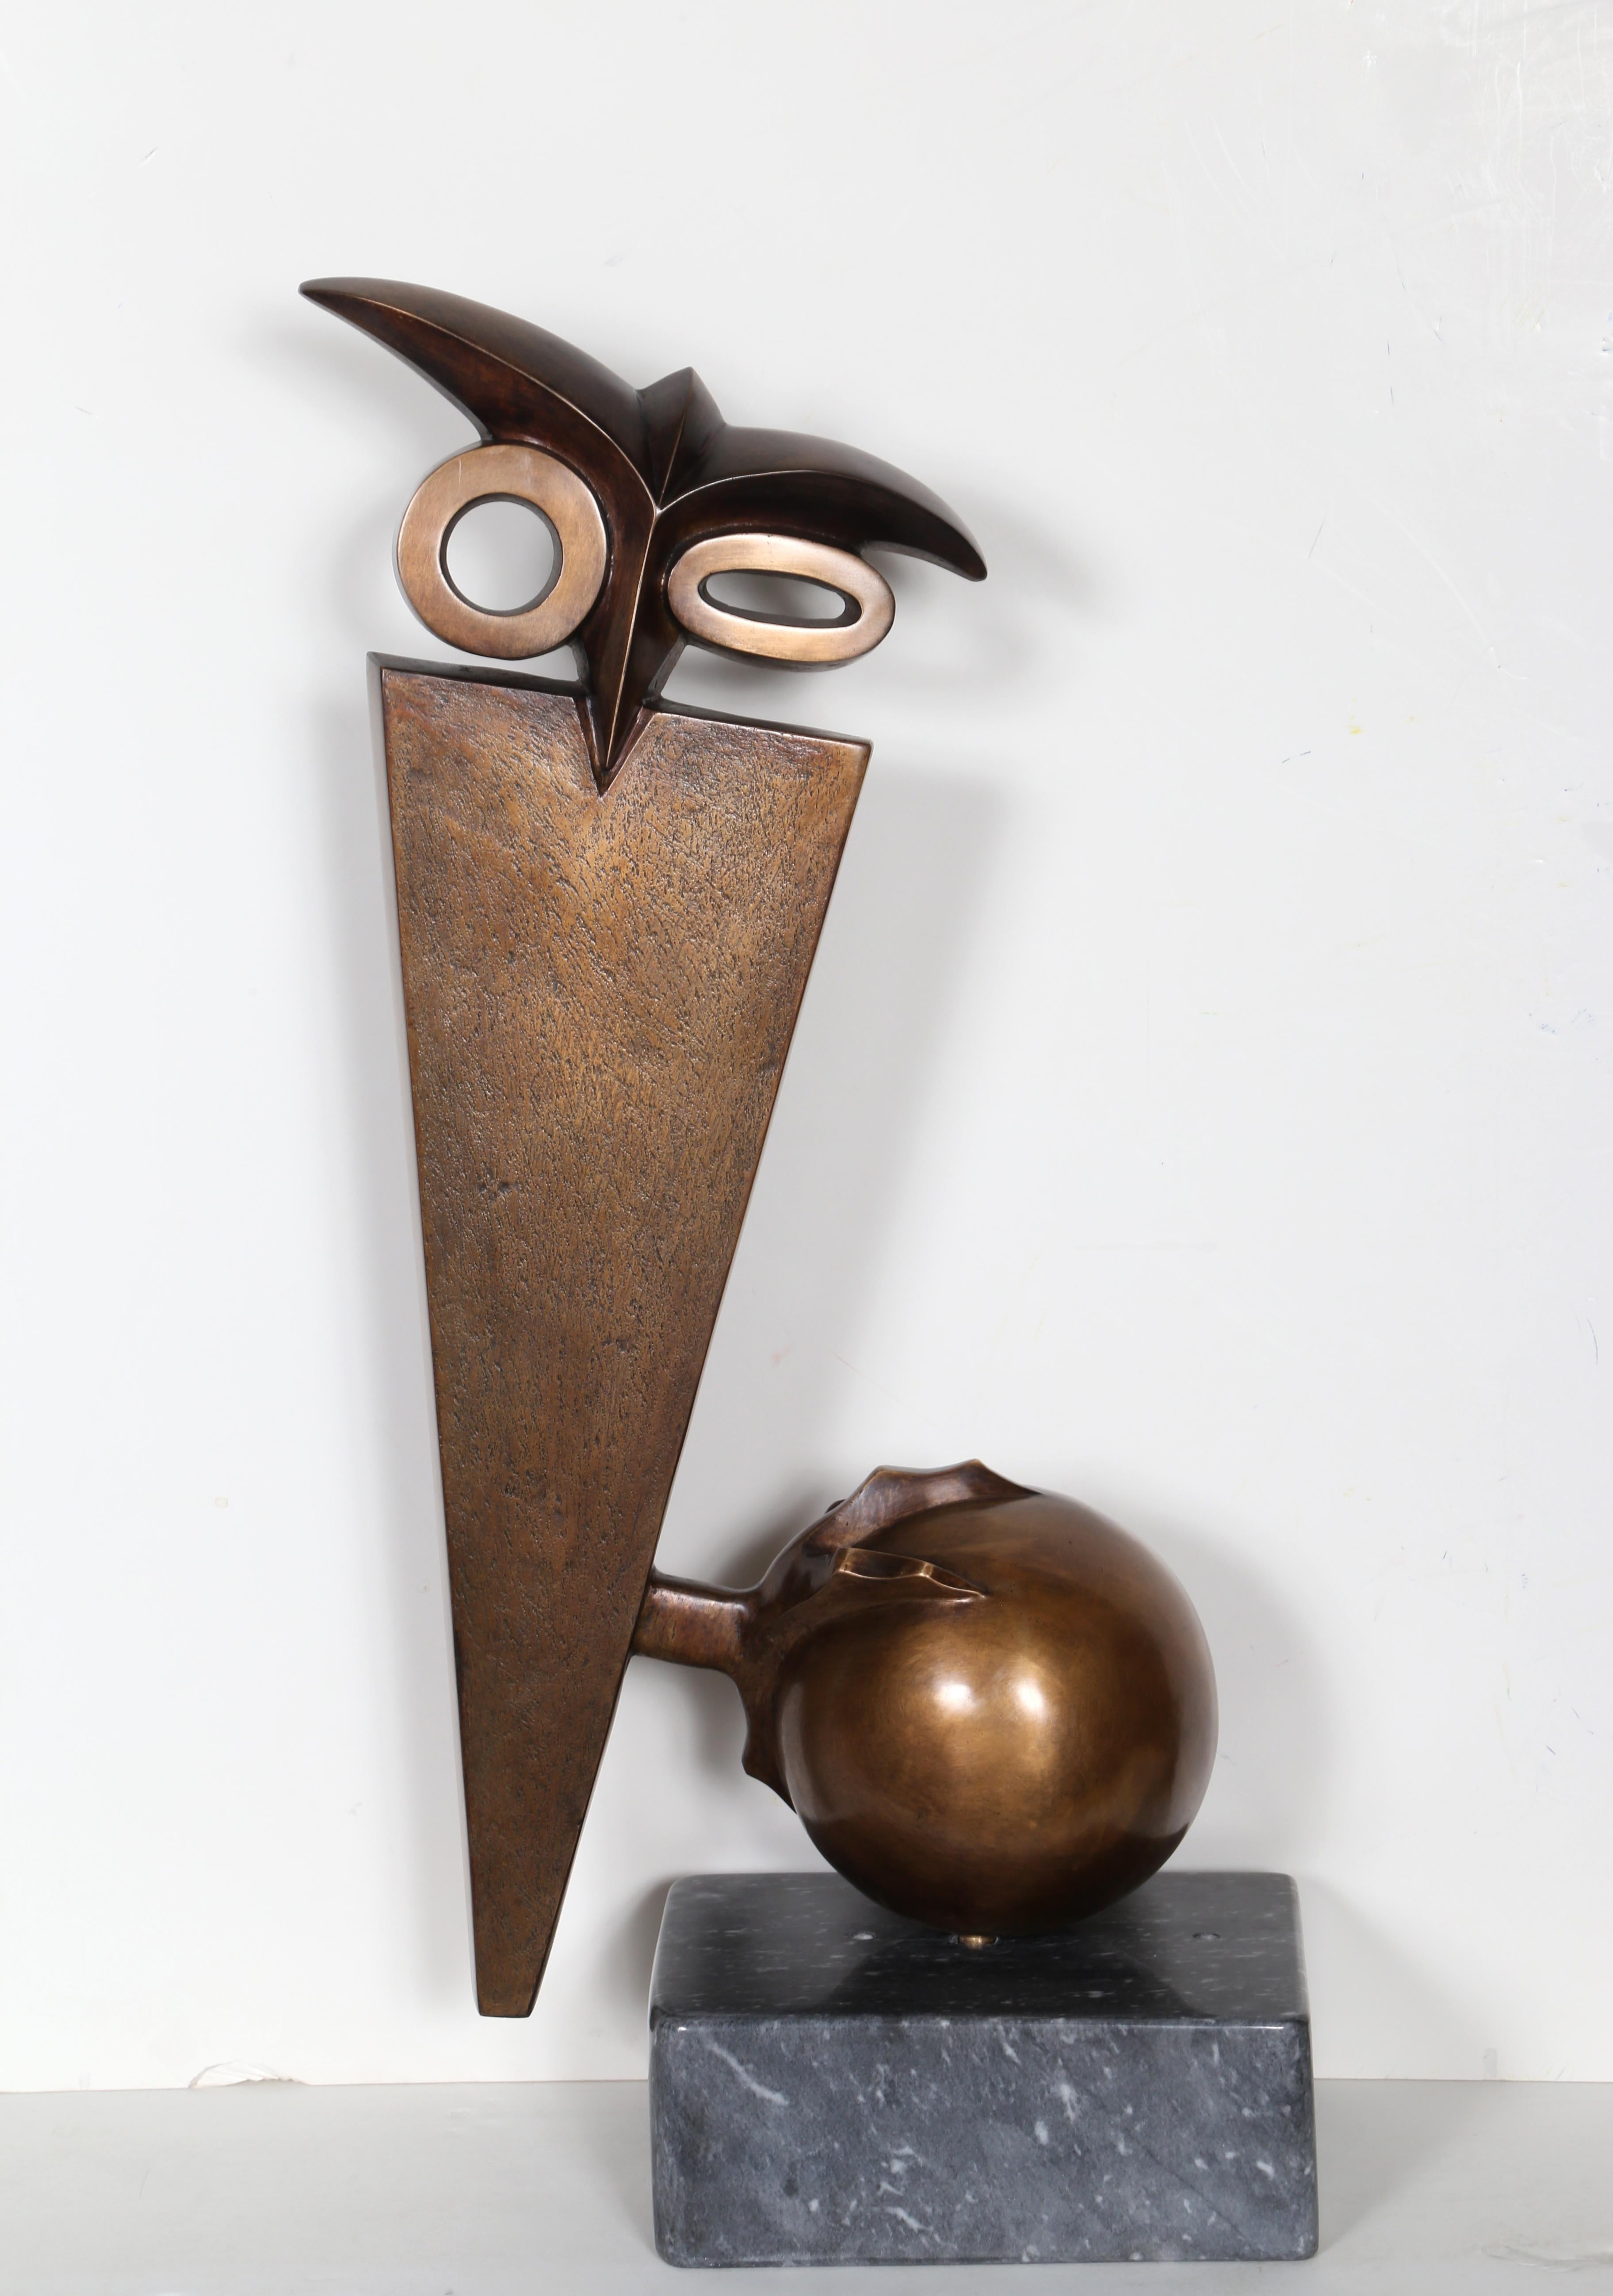 Constantin Antonovici Figurative Sculpture - Owl Perched on Ball, Modern Bronze by Antonovici 1957